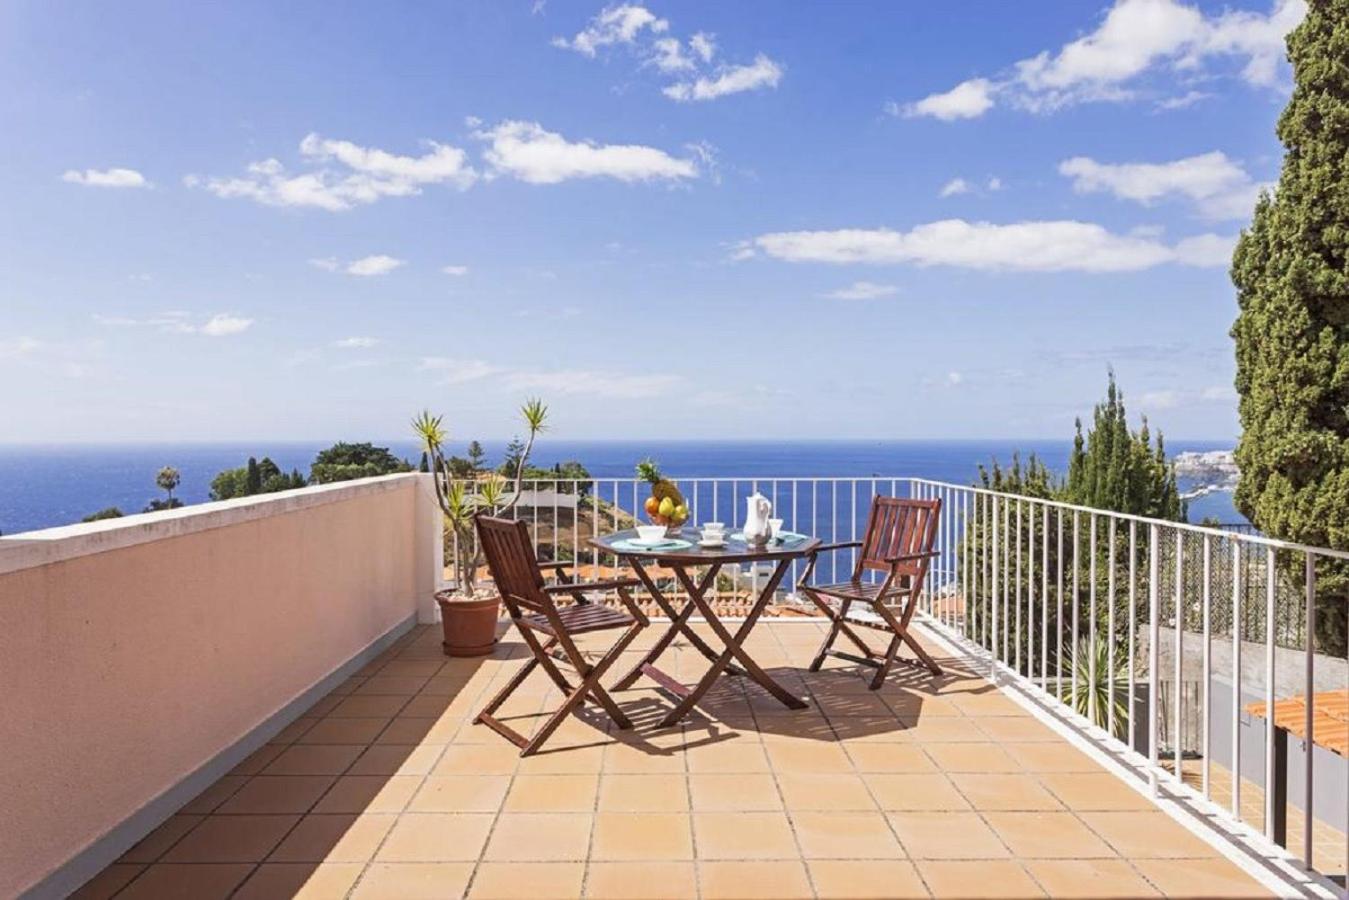 Funchal Bay View Villa by Madeira Sun Travel, Funchal